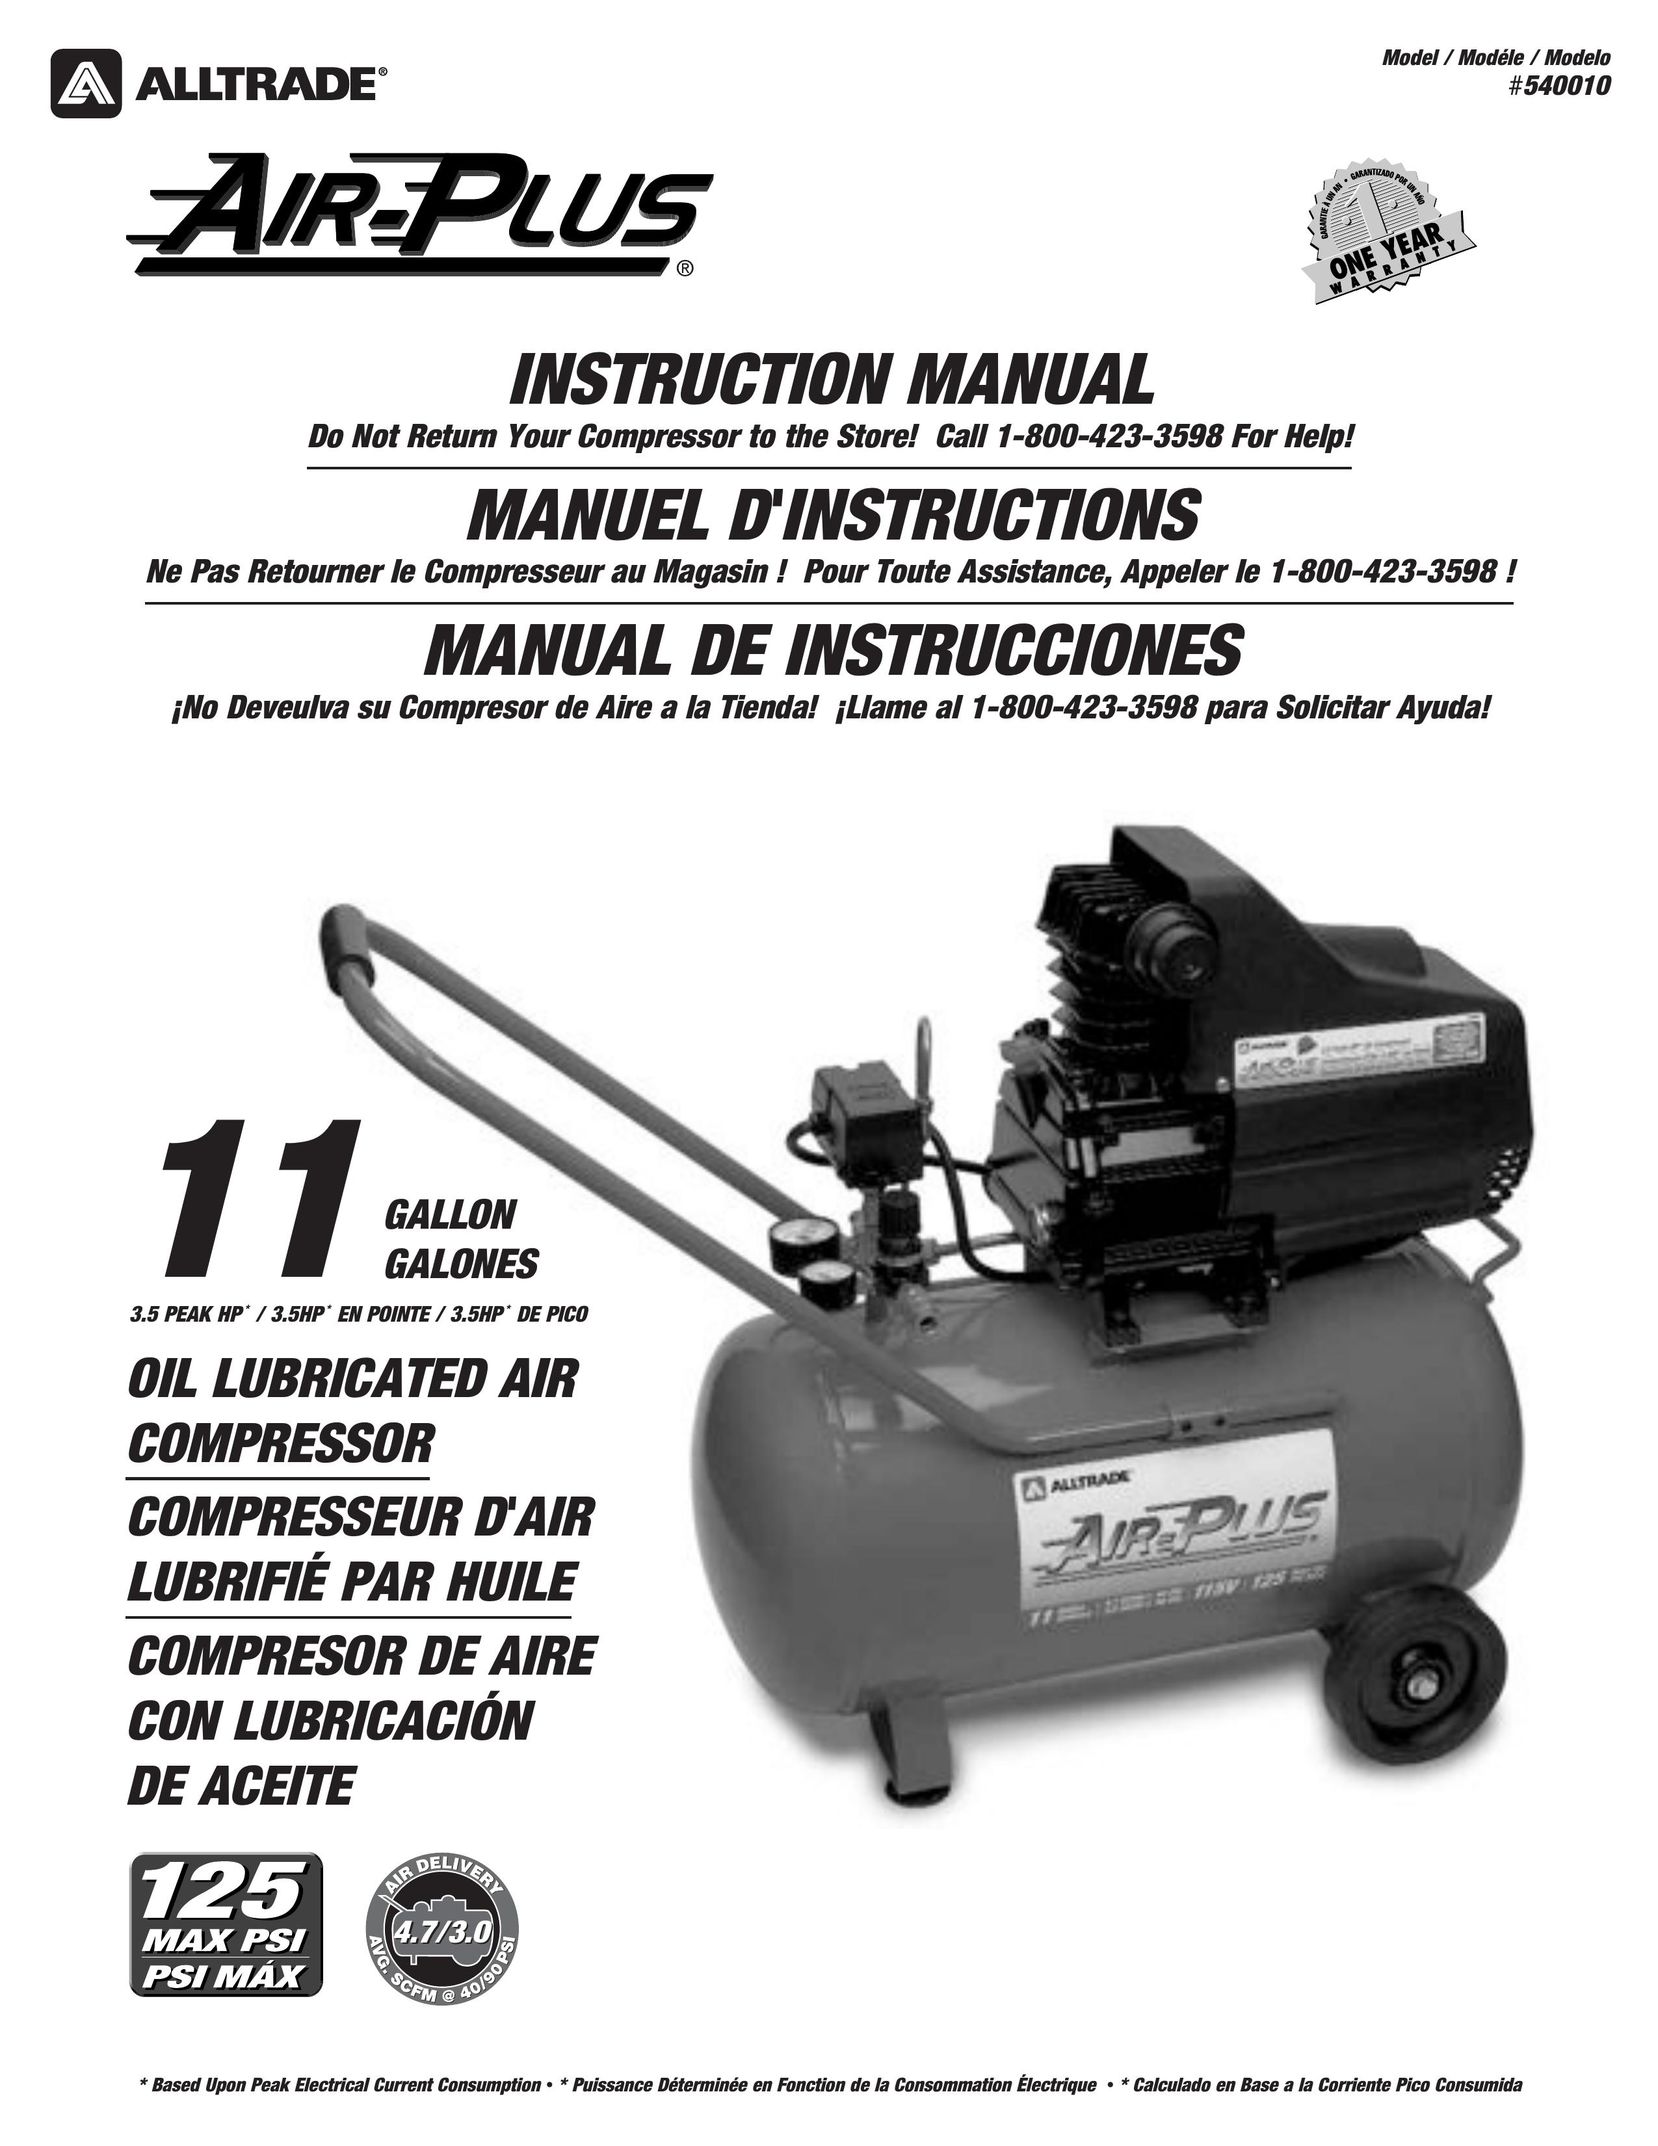 AllTrade 540010 Air Compressor User Manual